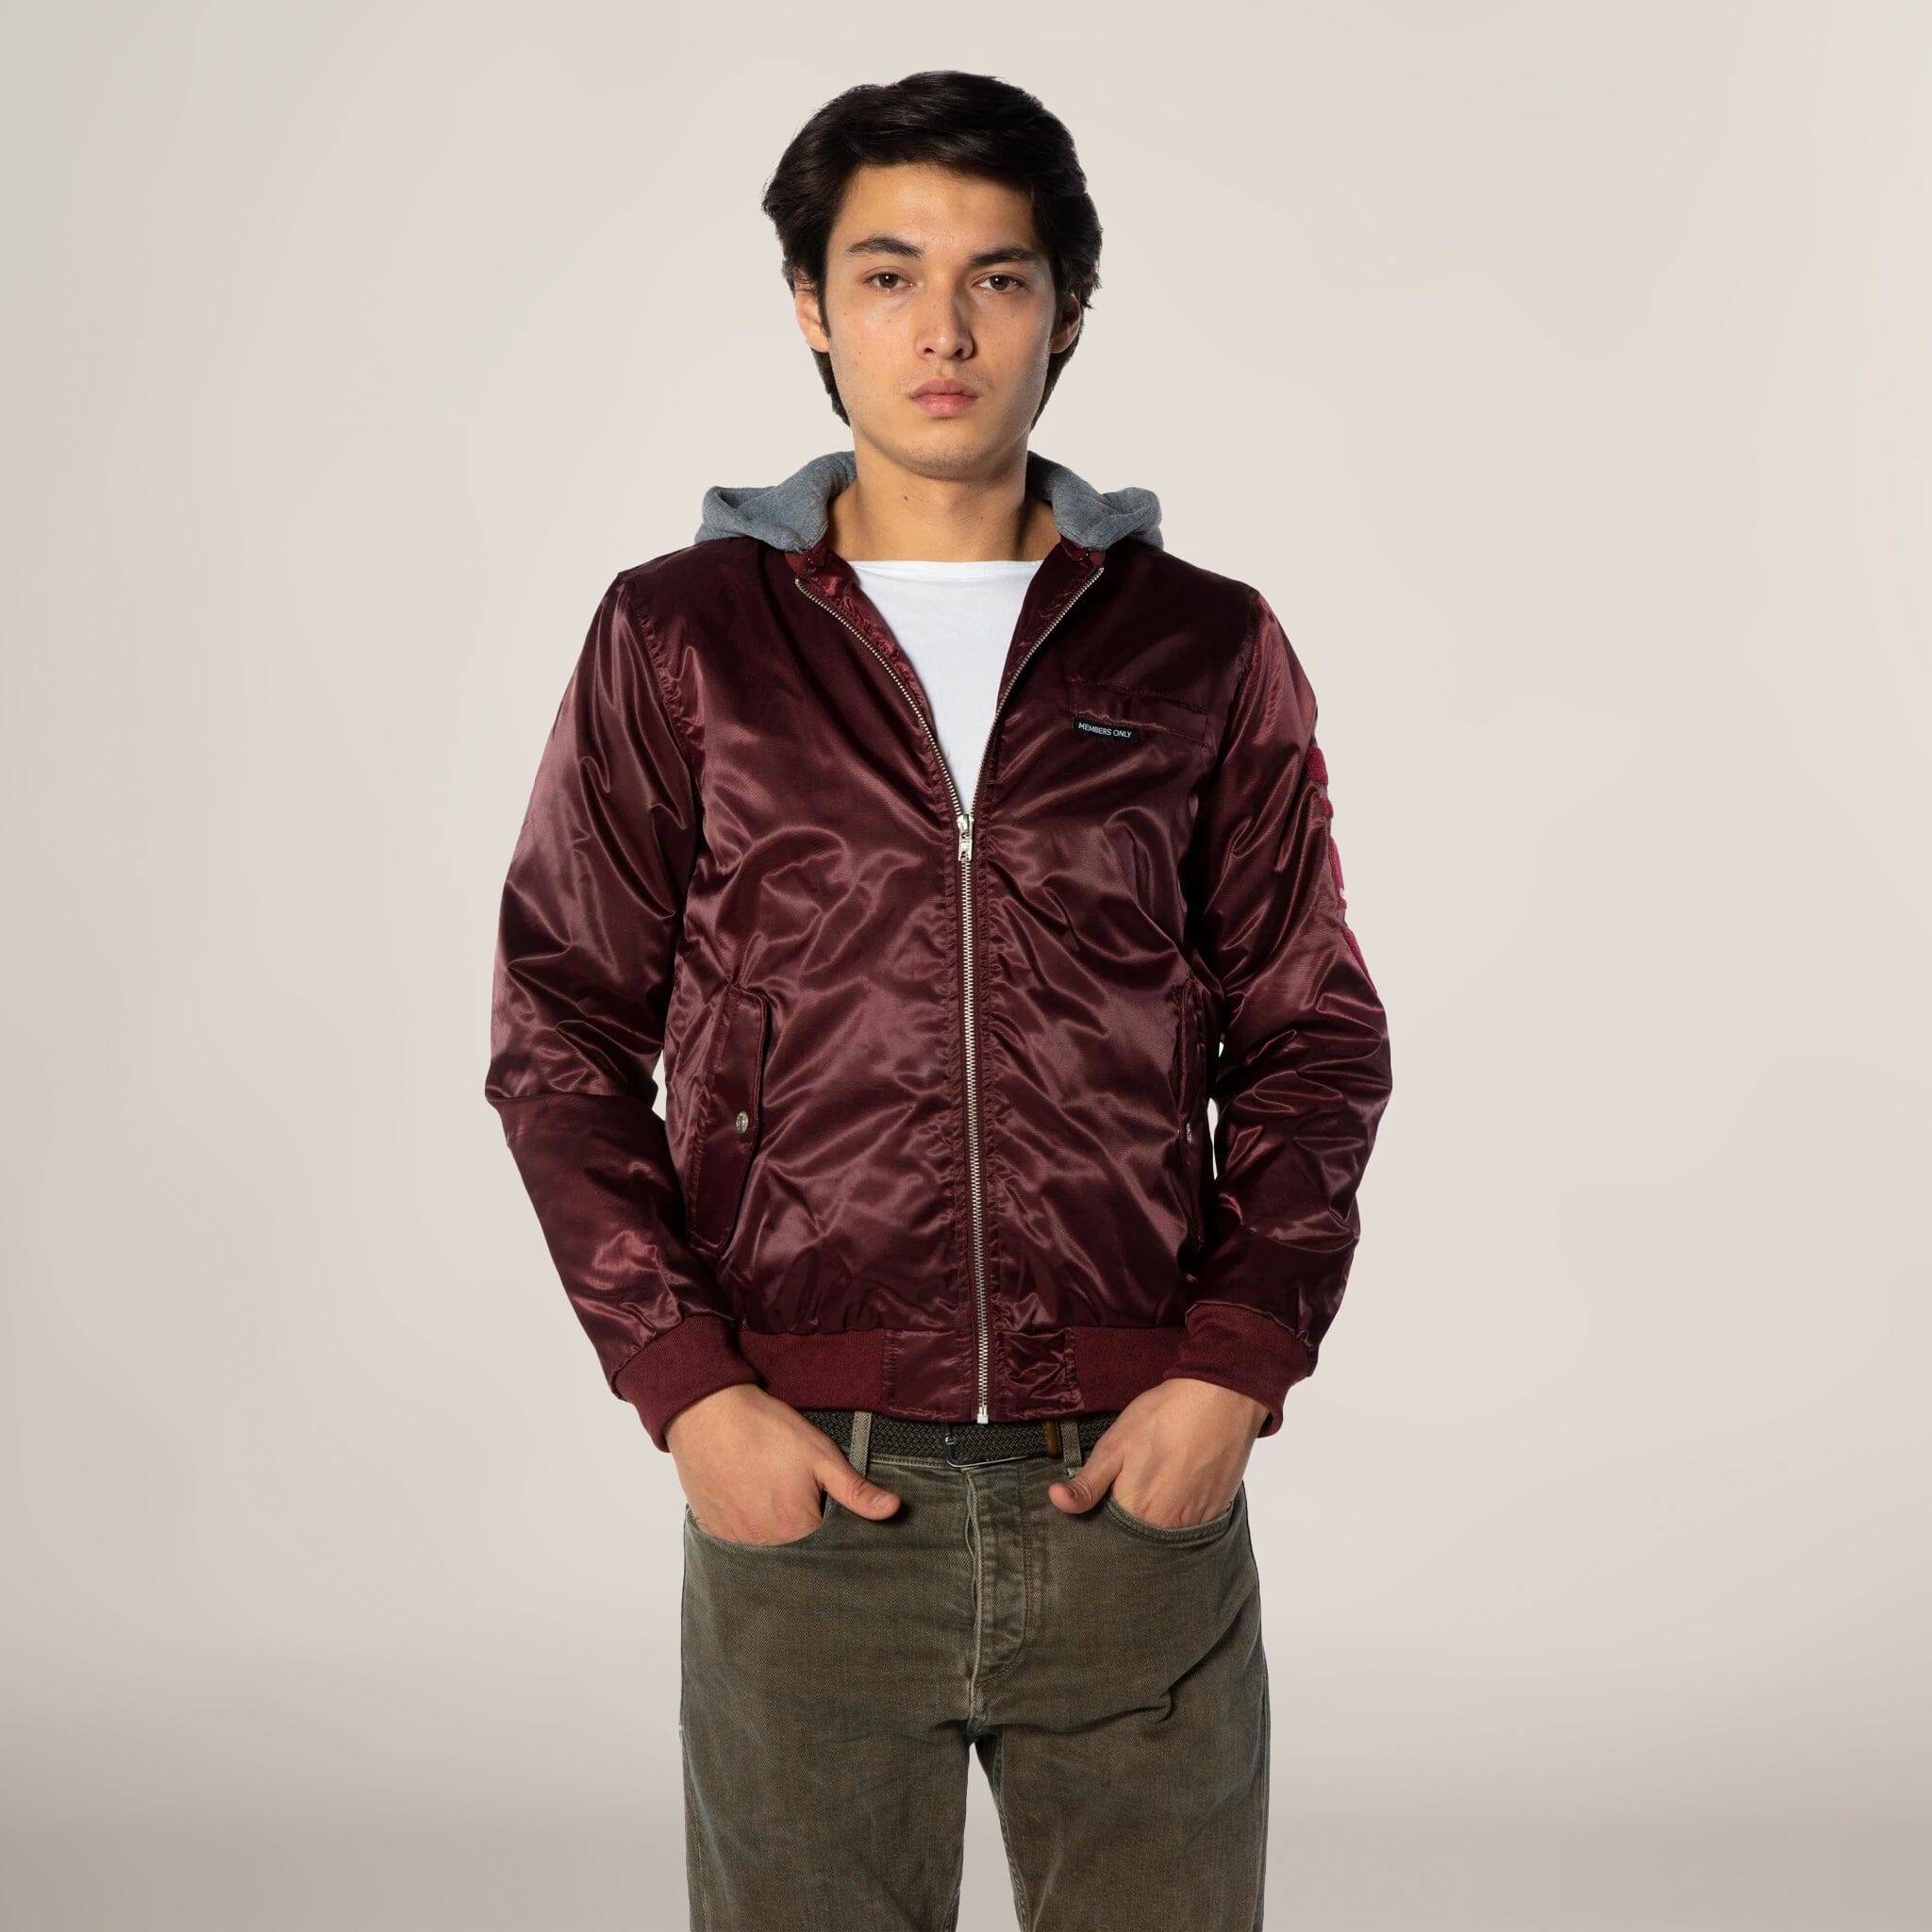 Buy Online Hooded Jacket for Men's